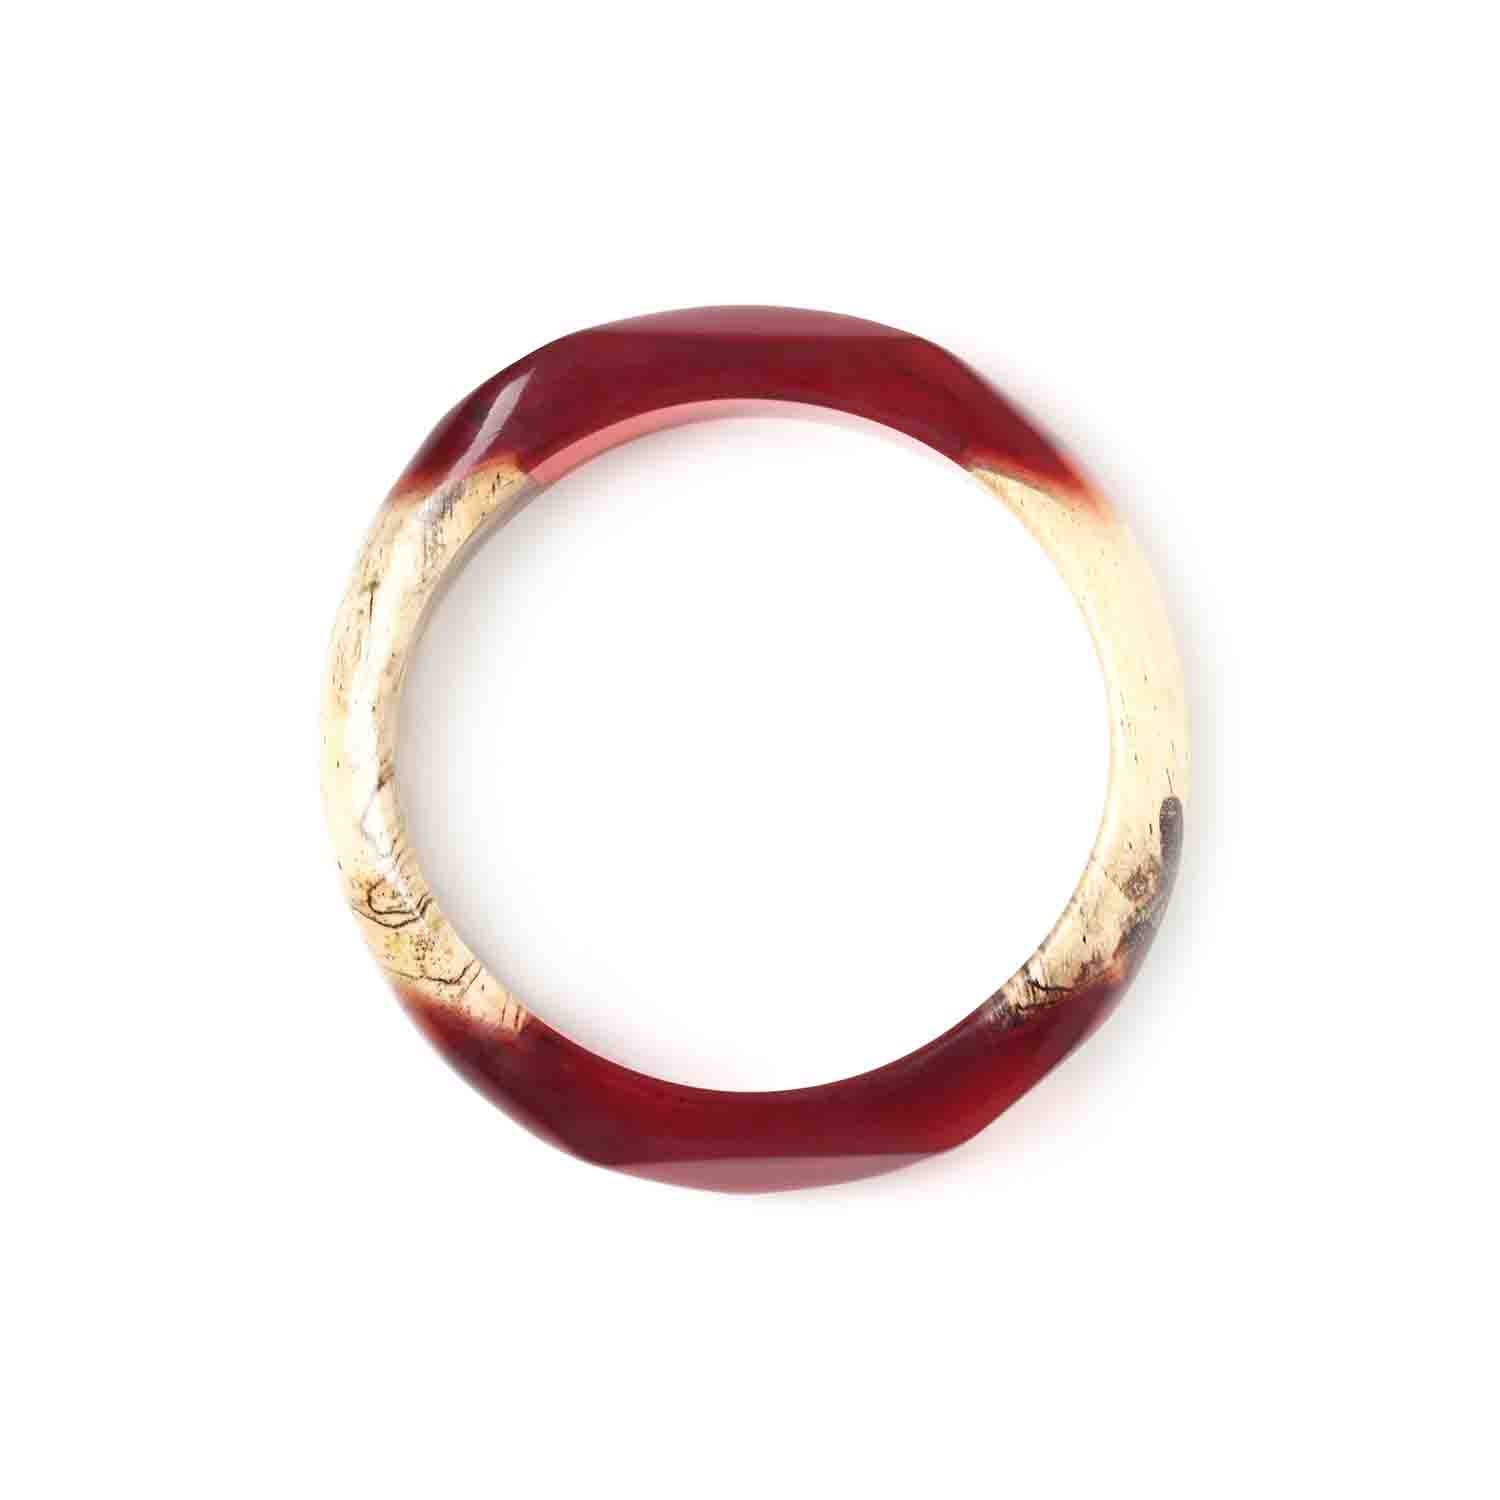 Nature Bijoux Bangle Bracelet / Tamarind, Eco Resin / Red, Beige / Natural Materials / Sweet Amber-2